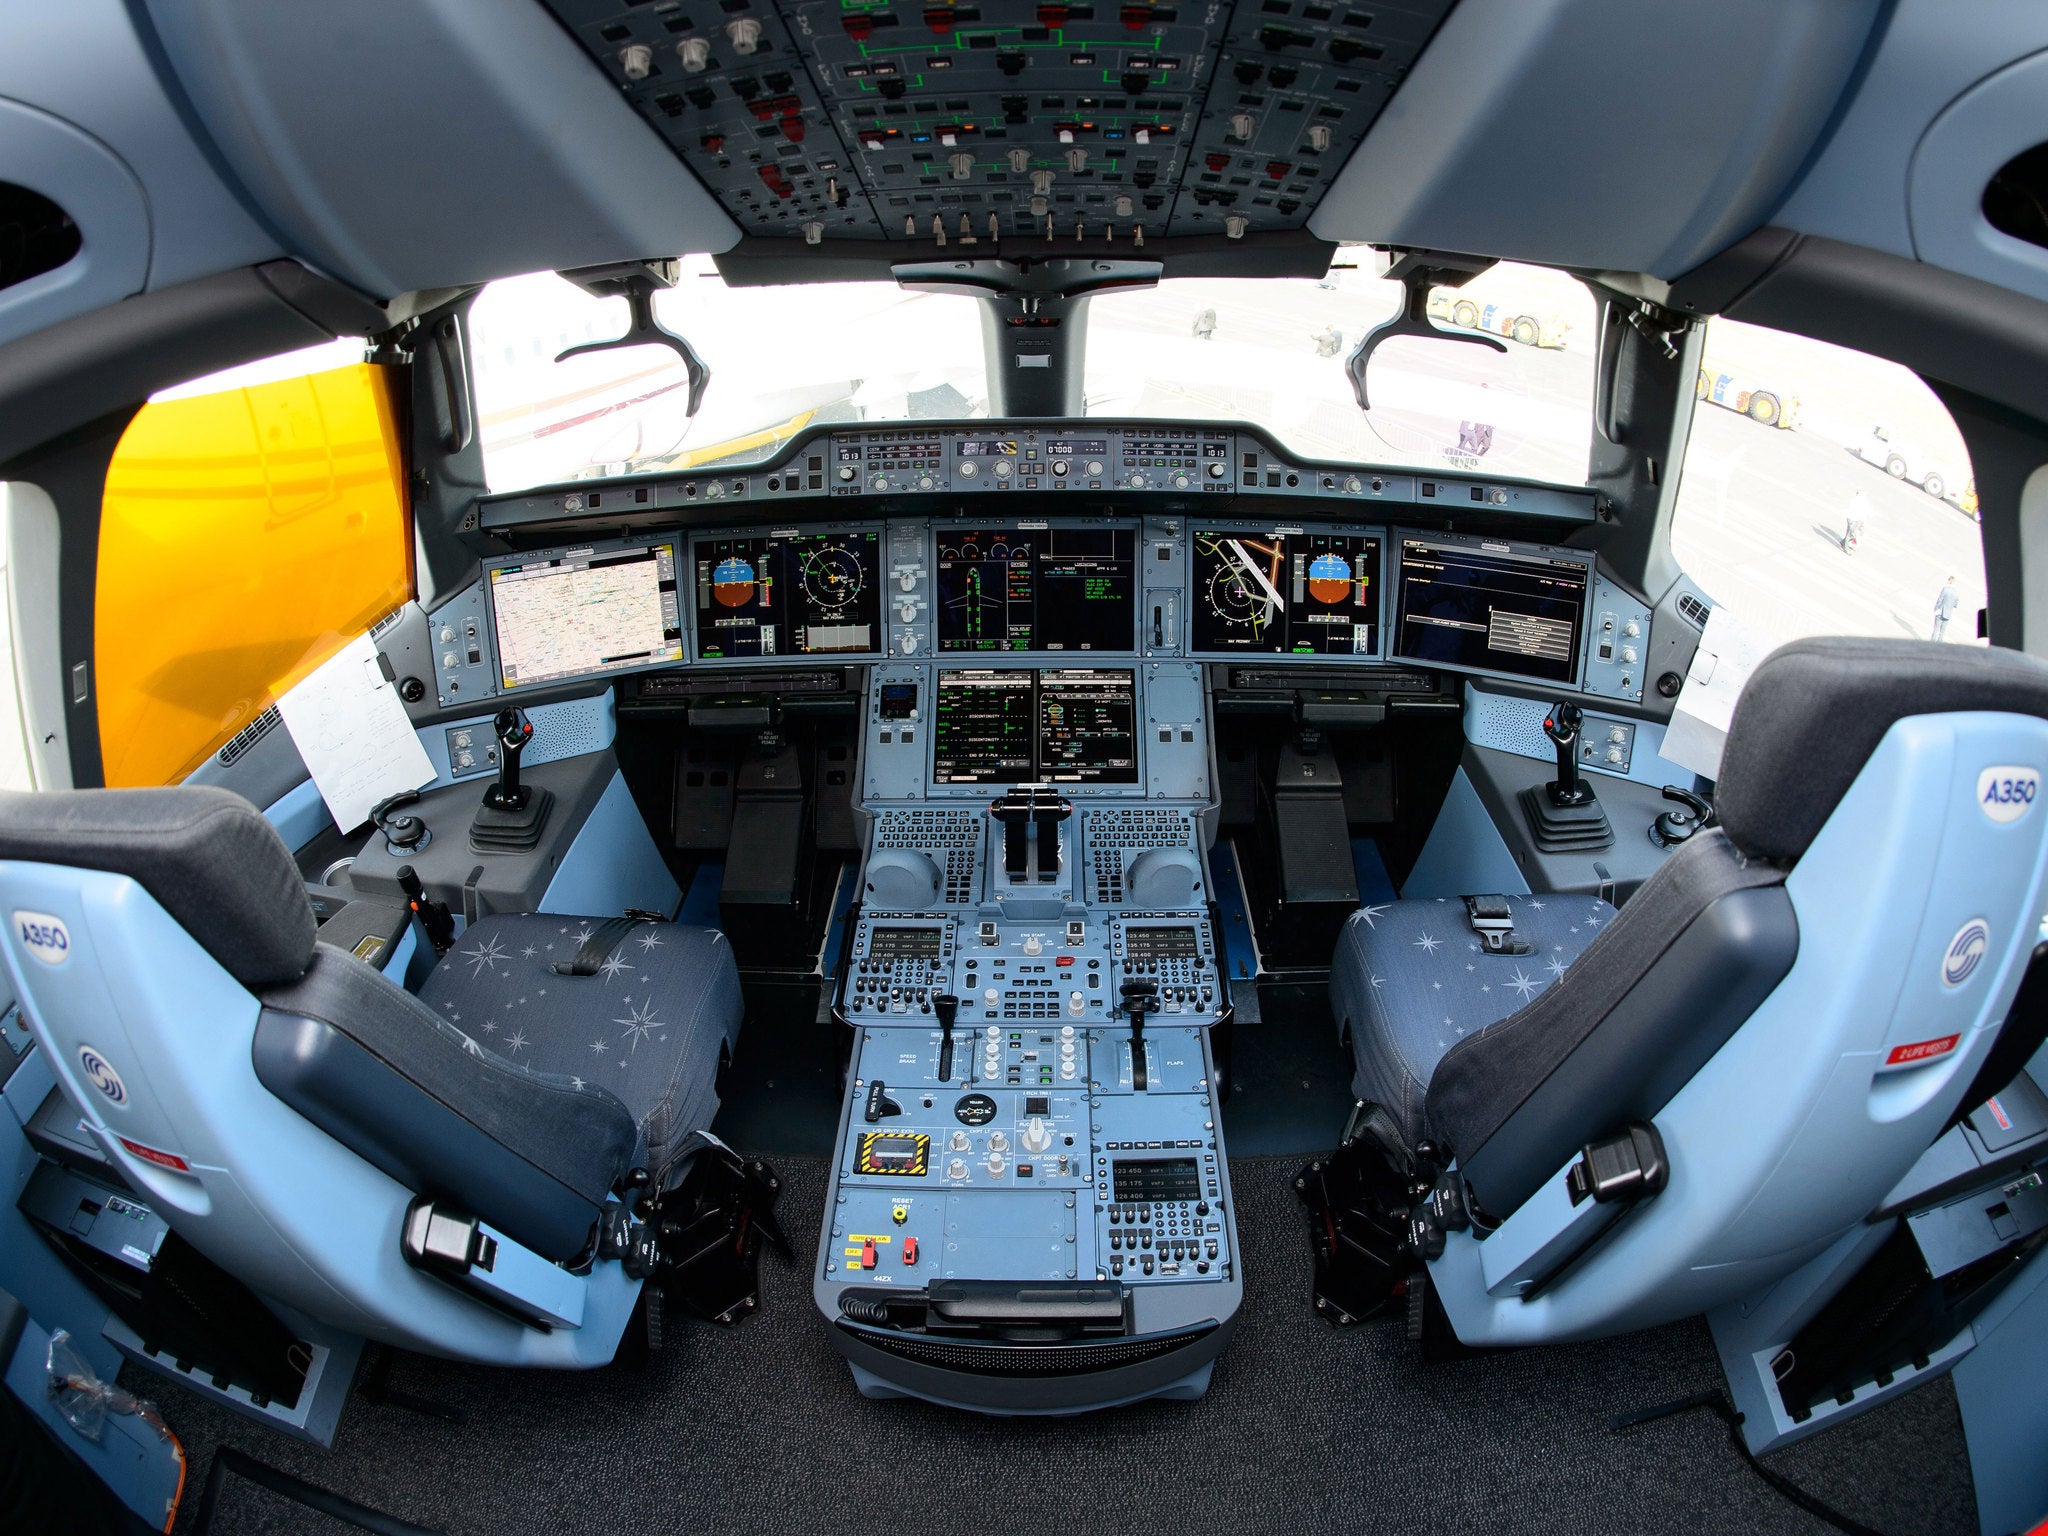 Interior view of a flight deck